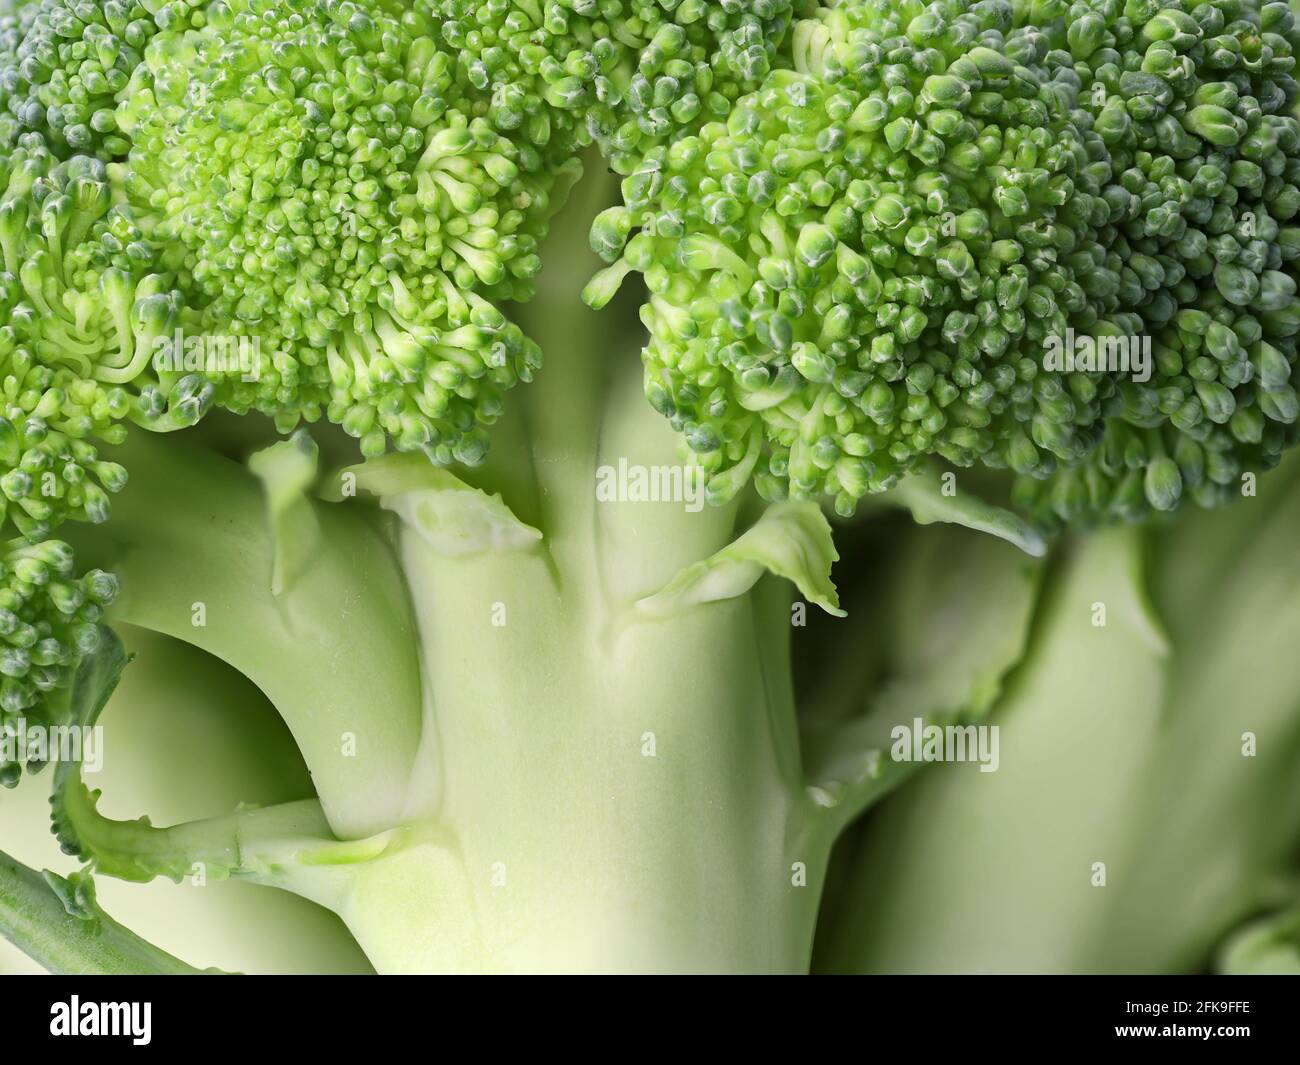 green fresh raw broccoli background, close up Stock Photo